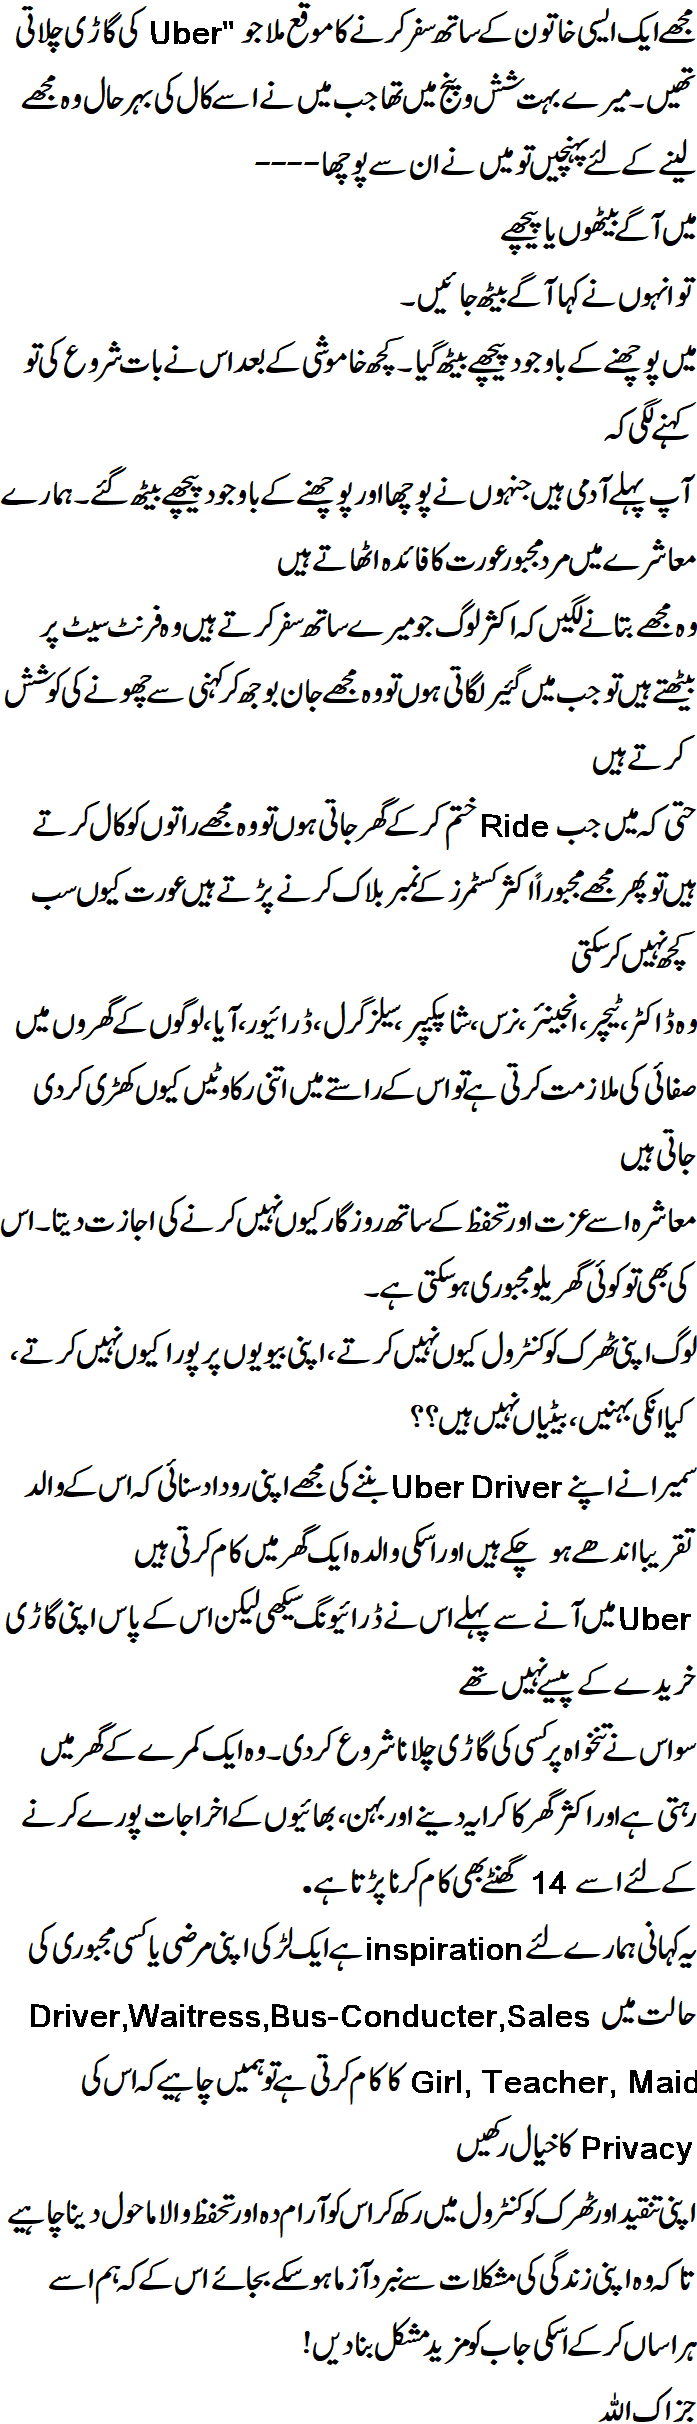 uber-driver